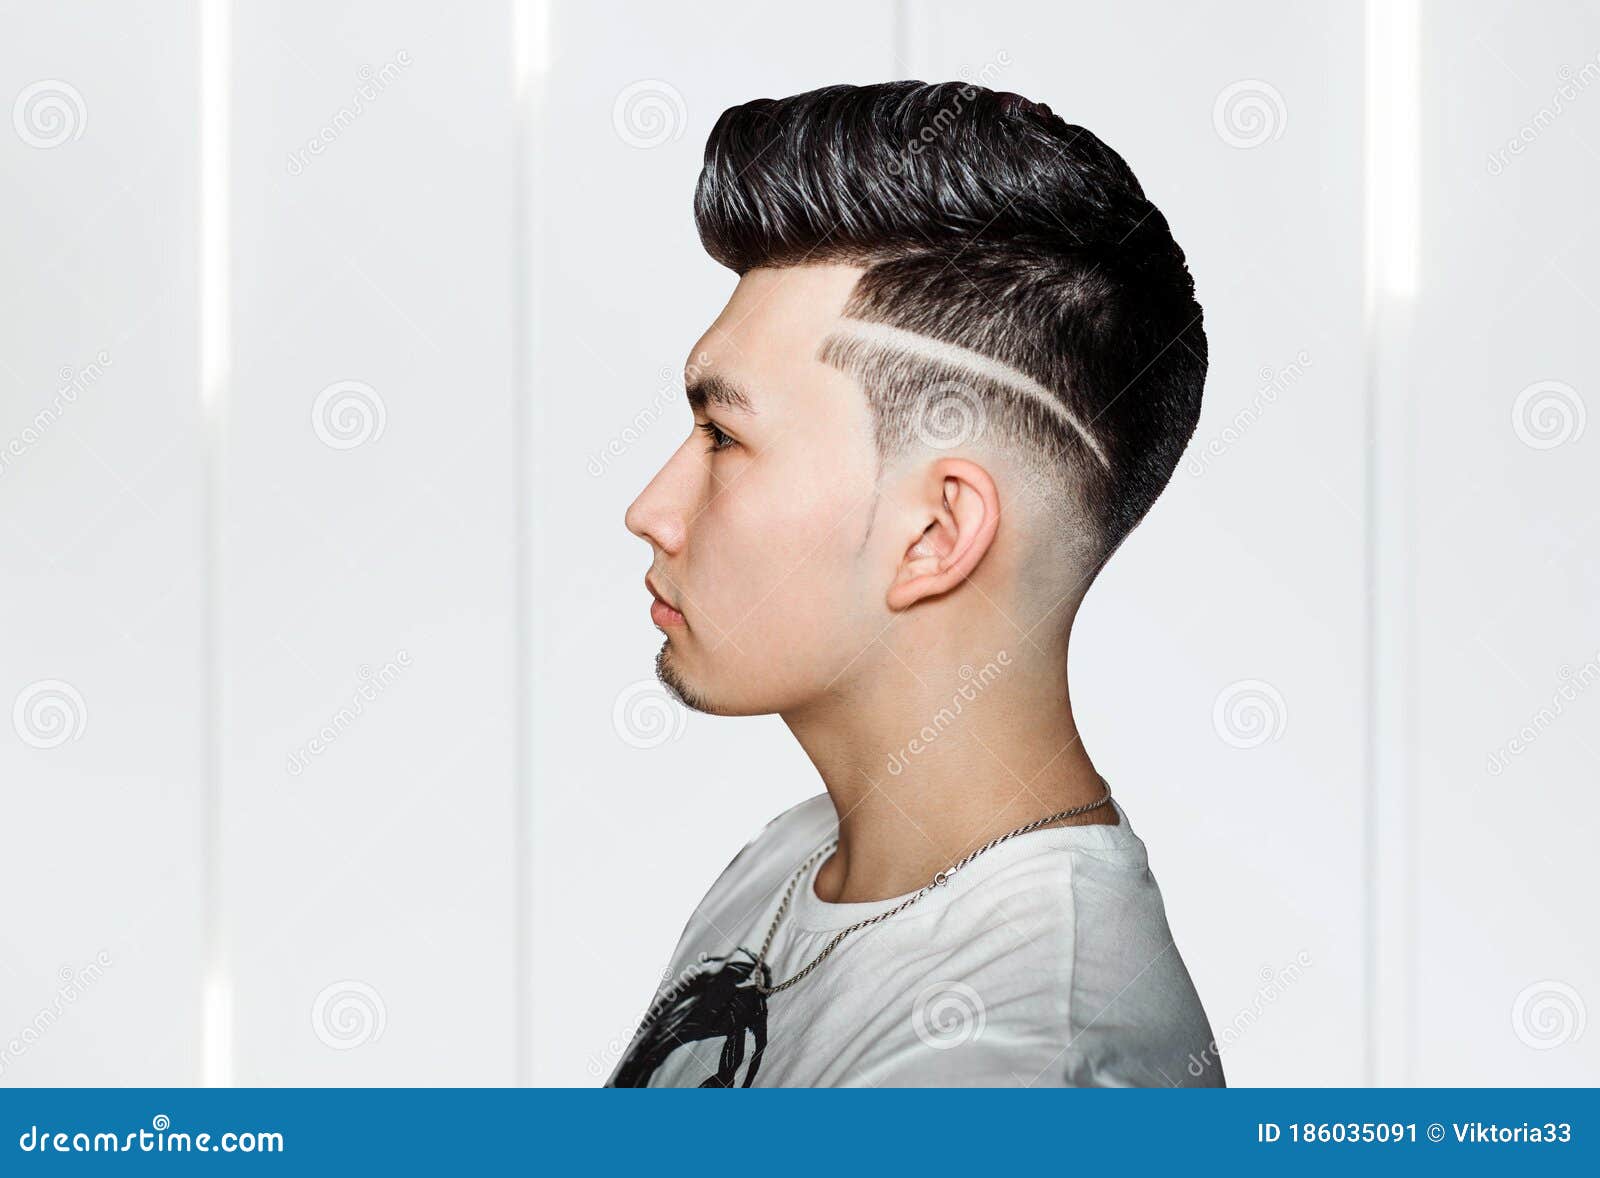 Pompadour Haircut | How To Style A Pompadour | Axe